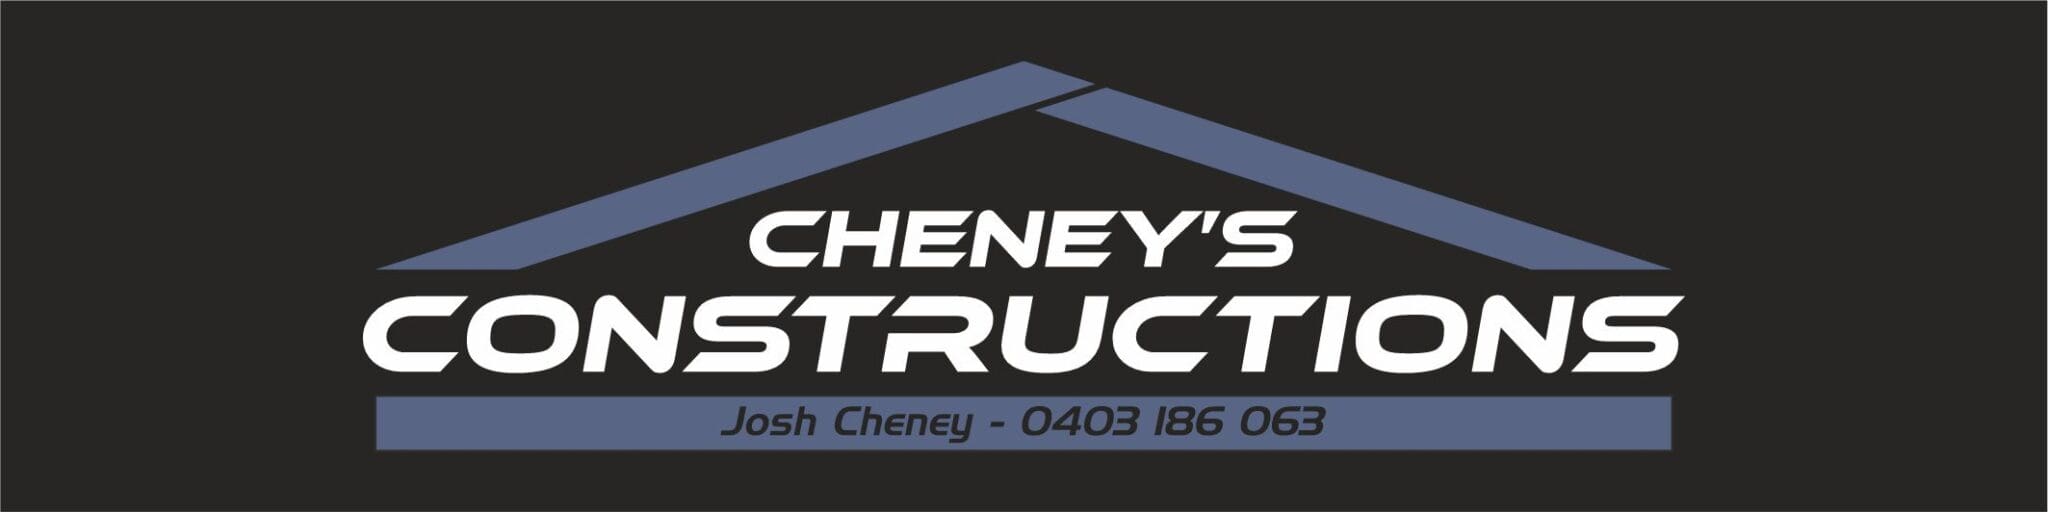 Cheneys Construction logo